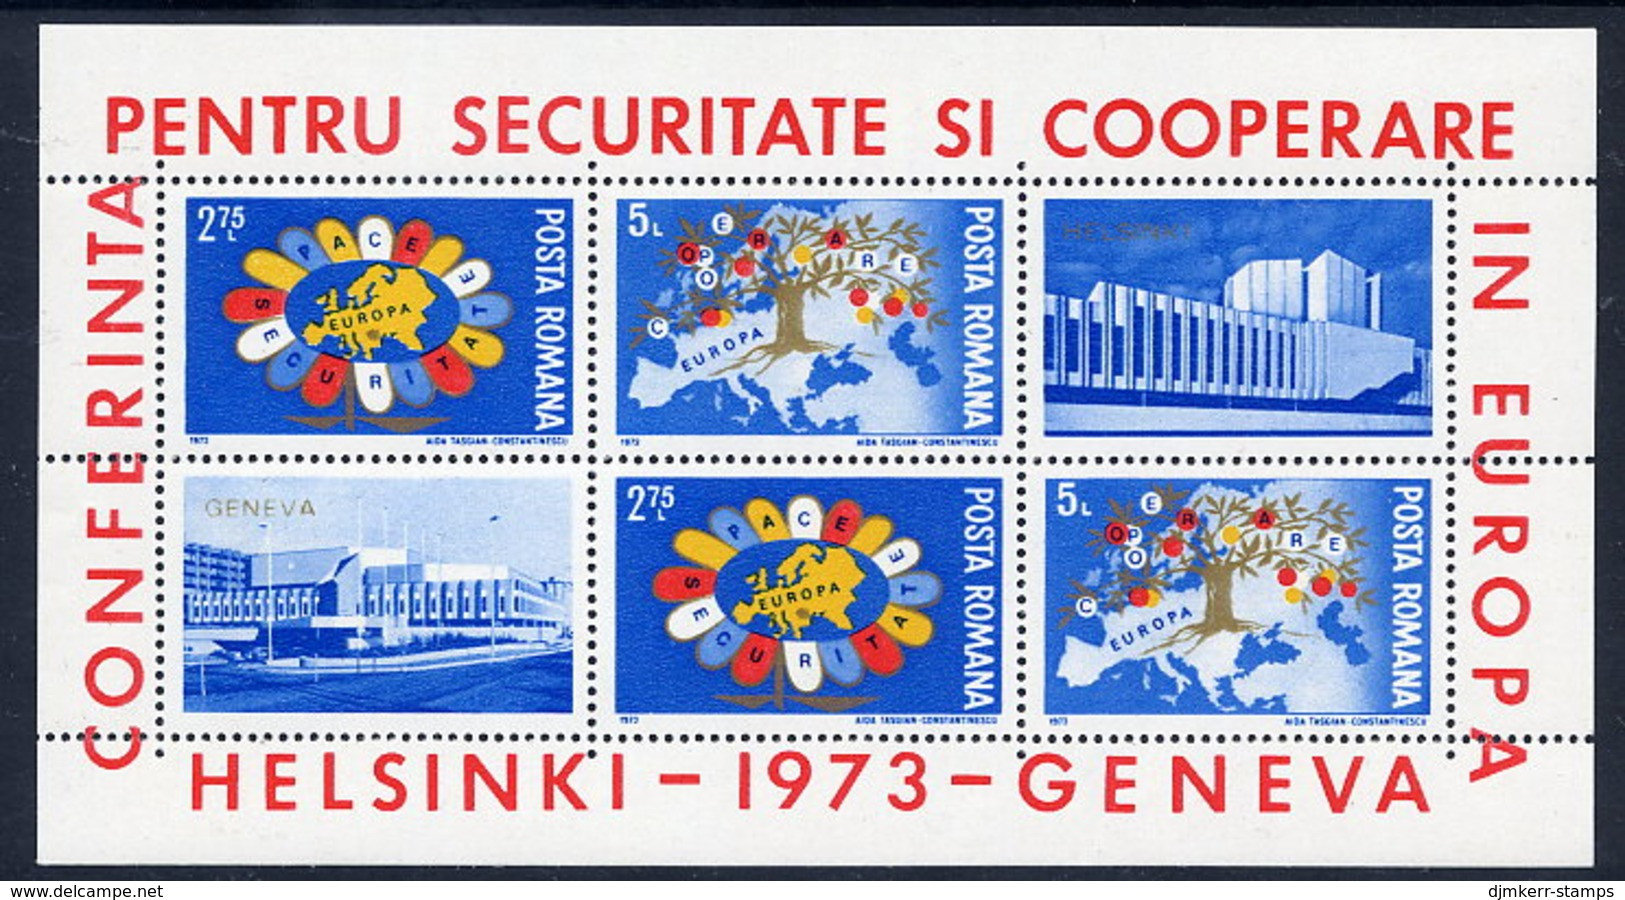 ROMANIA 1973 European Security Conference Block MNH / **.  Michel Block 108 - Blocks & Sheetlets